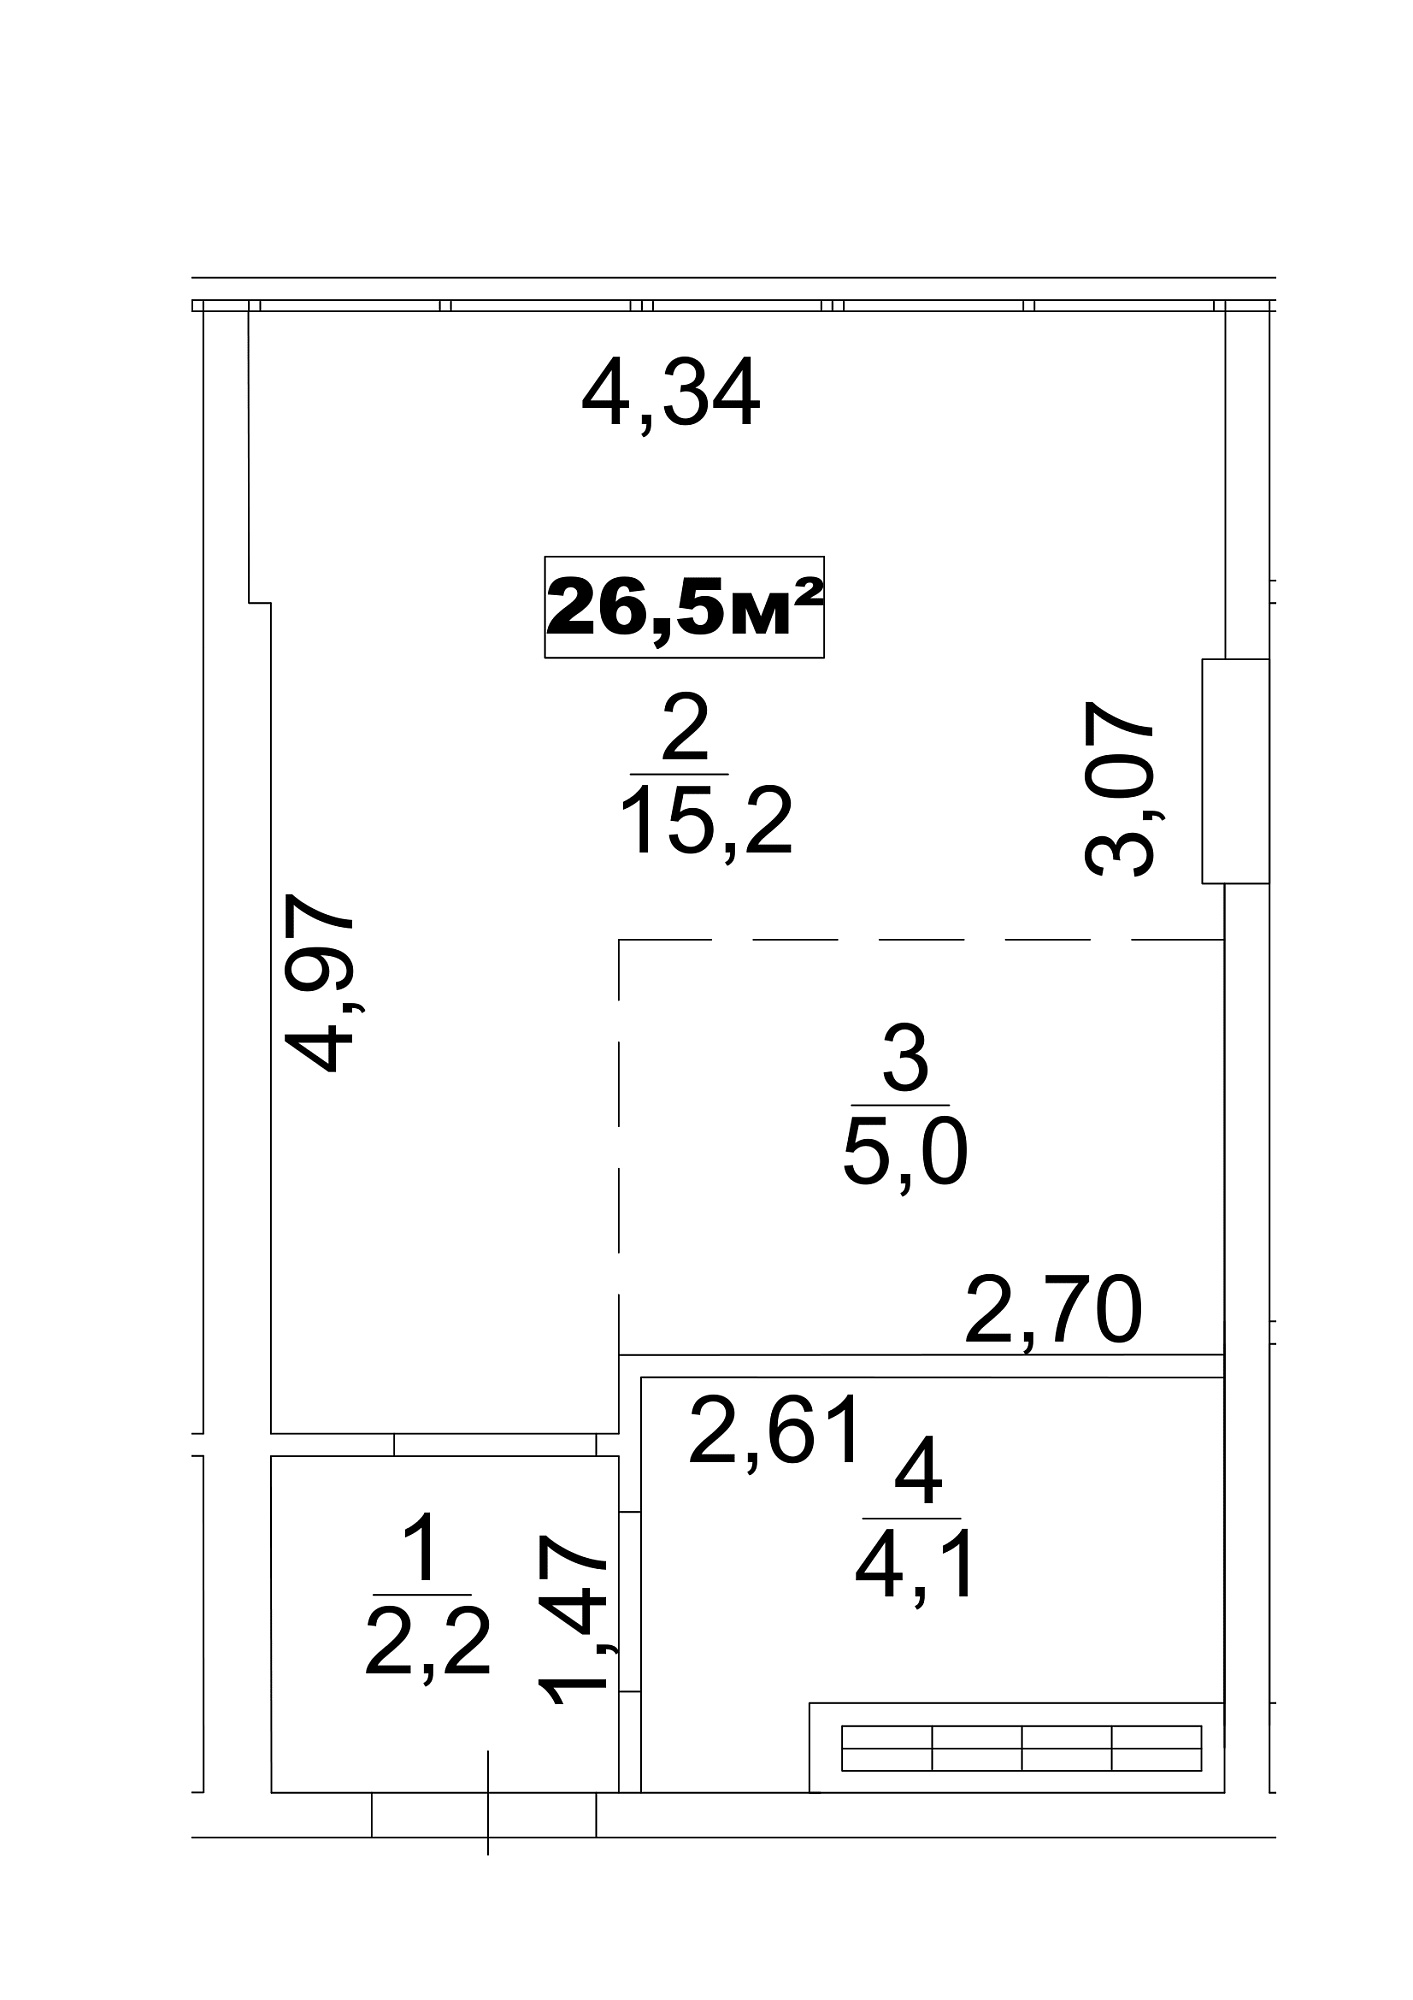 Planning Smart flats area 26.5m2, AB-13-05/0036в.